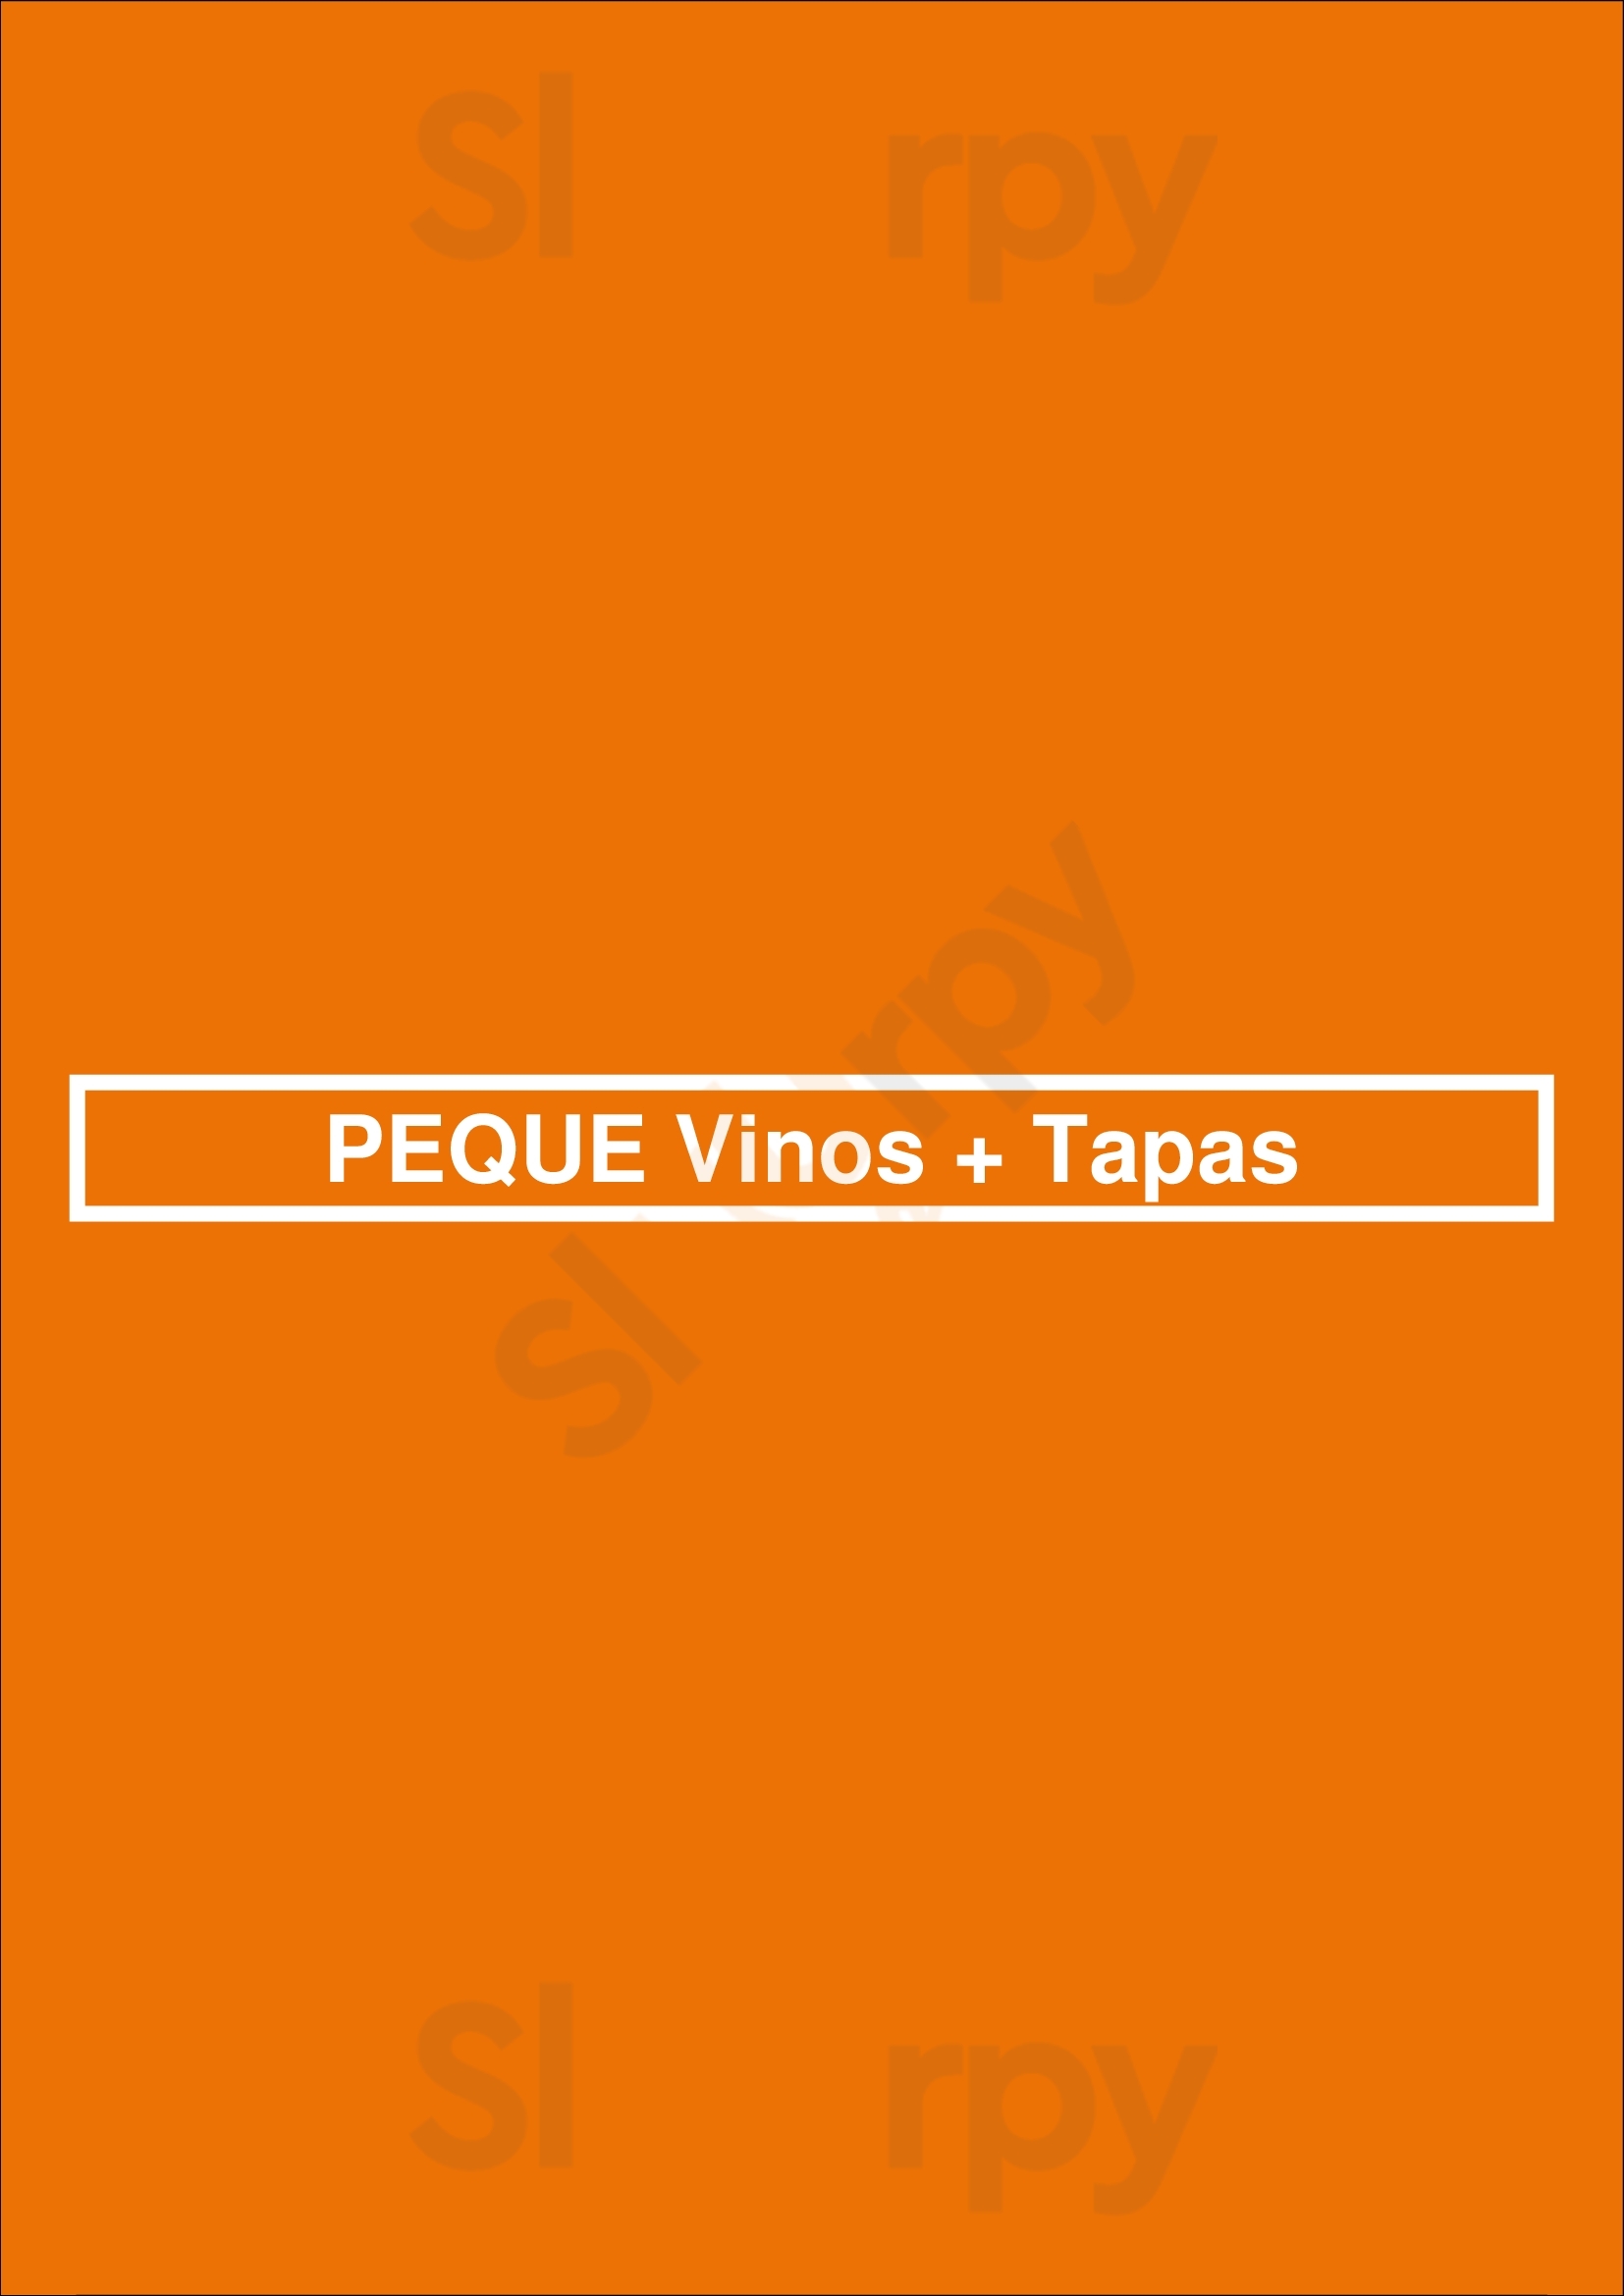 Peque Vinos + Tapas New York City Menu - 1